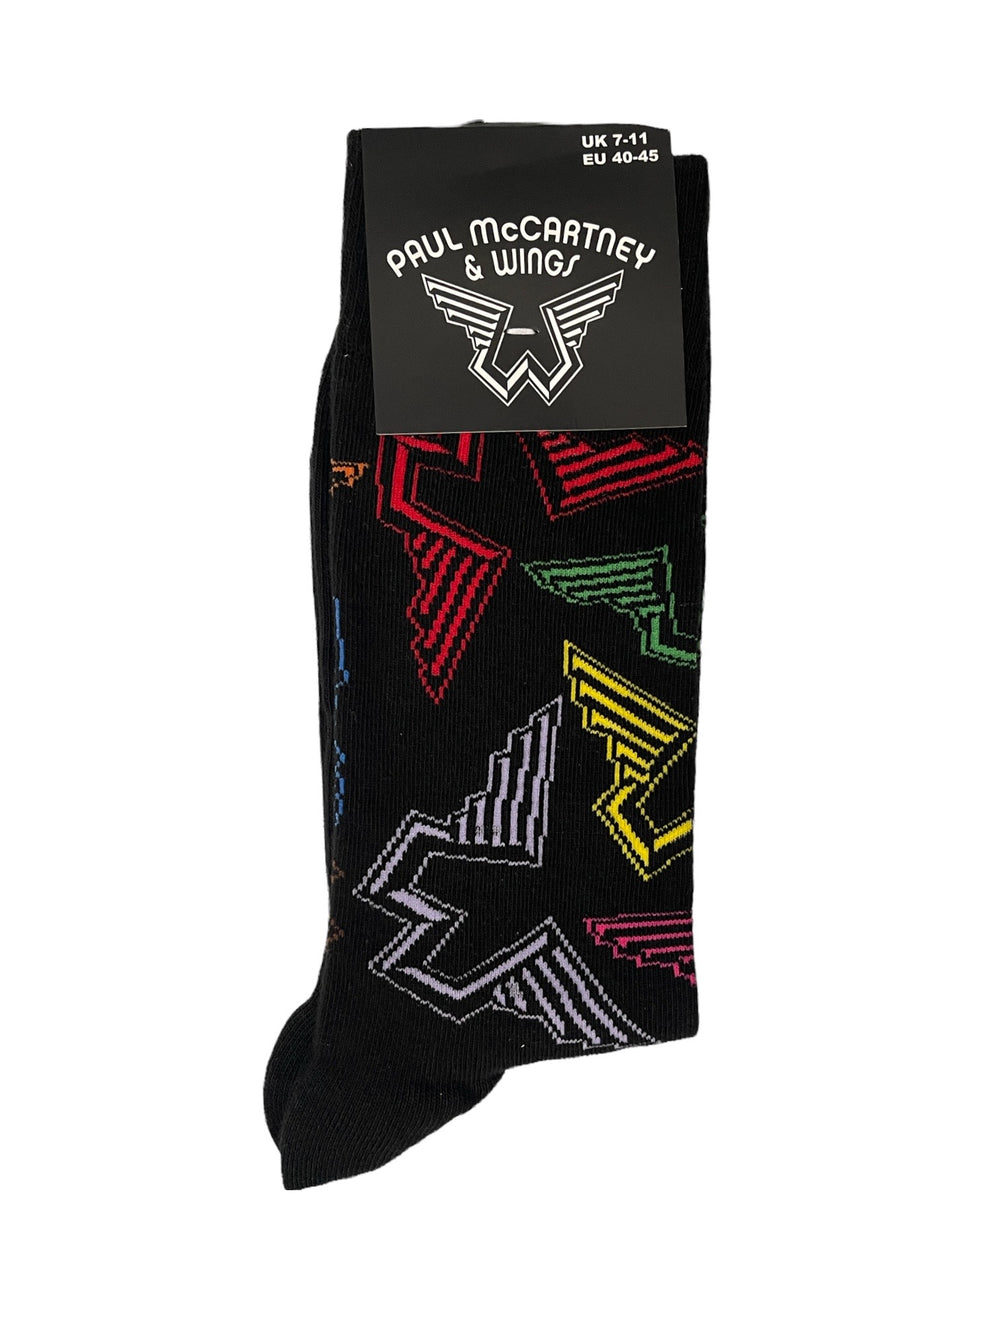 Paul McCartney & Wings Beatles The Black Official Product 1 Pair Jacquard Socks Size 7-11 UK